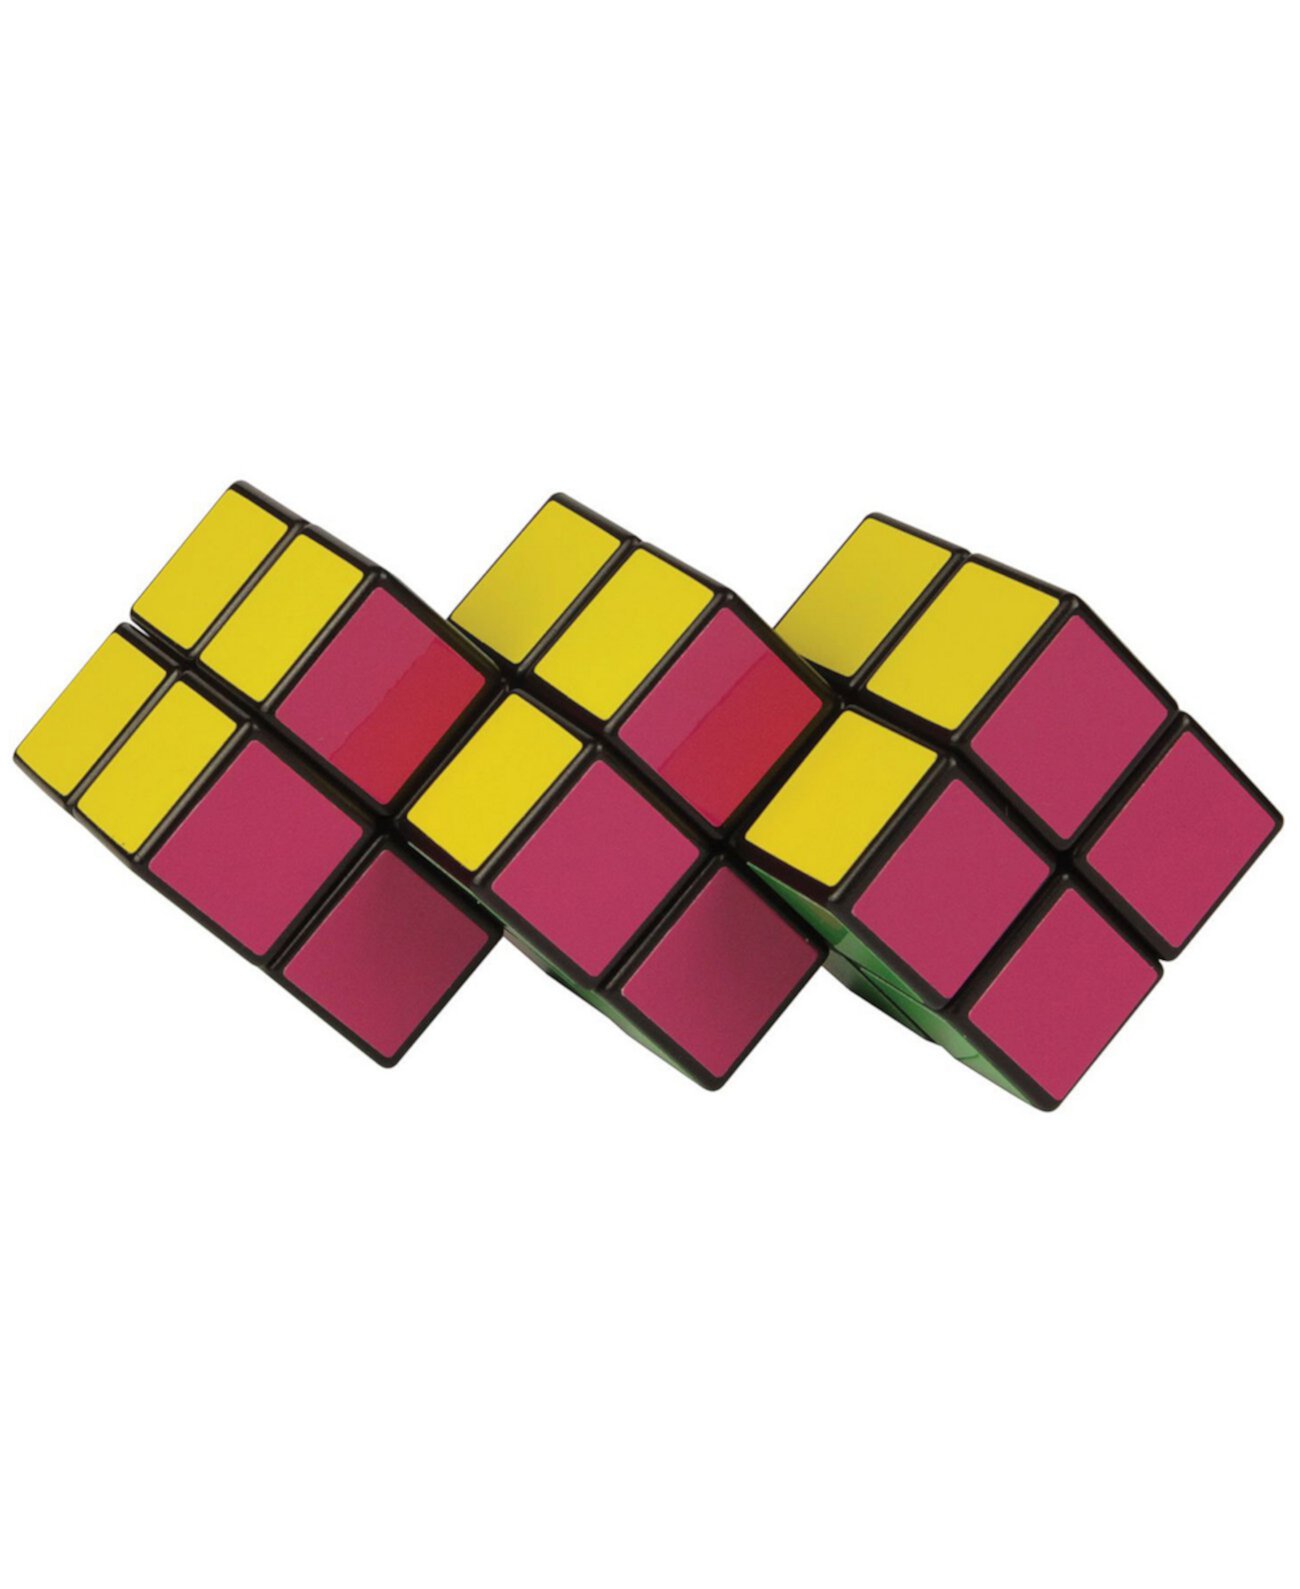 БОЛЬШОЙ Multicube - головоломка Triple Cube Family Games Inc.